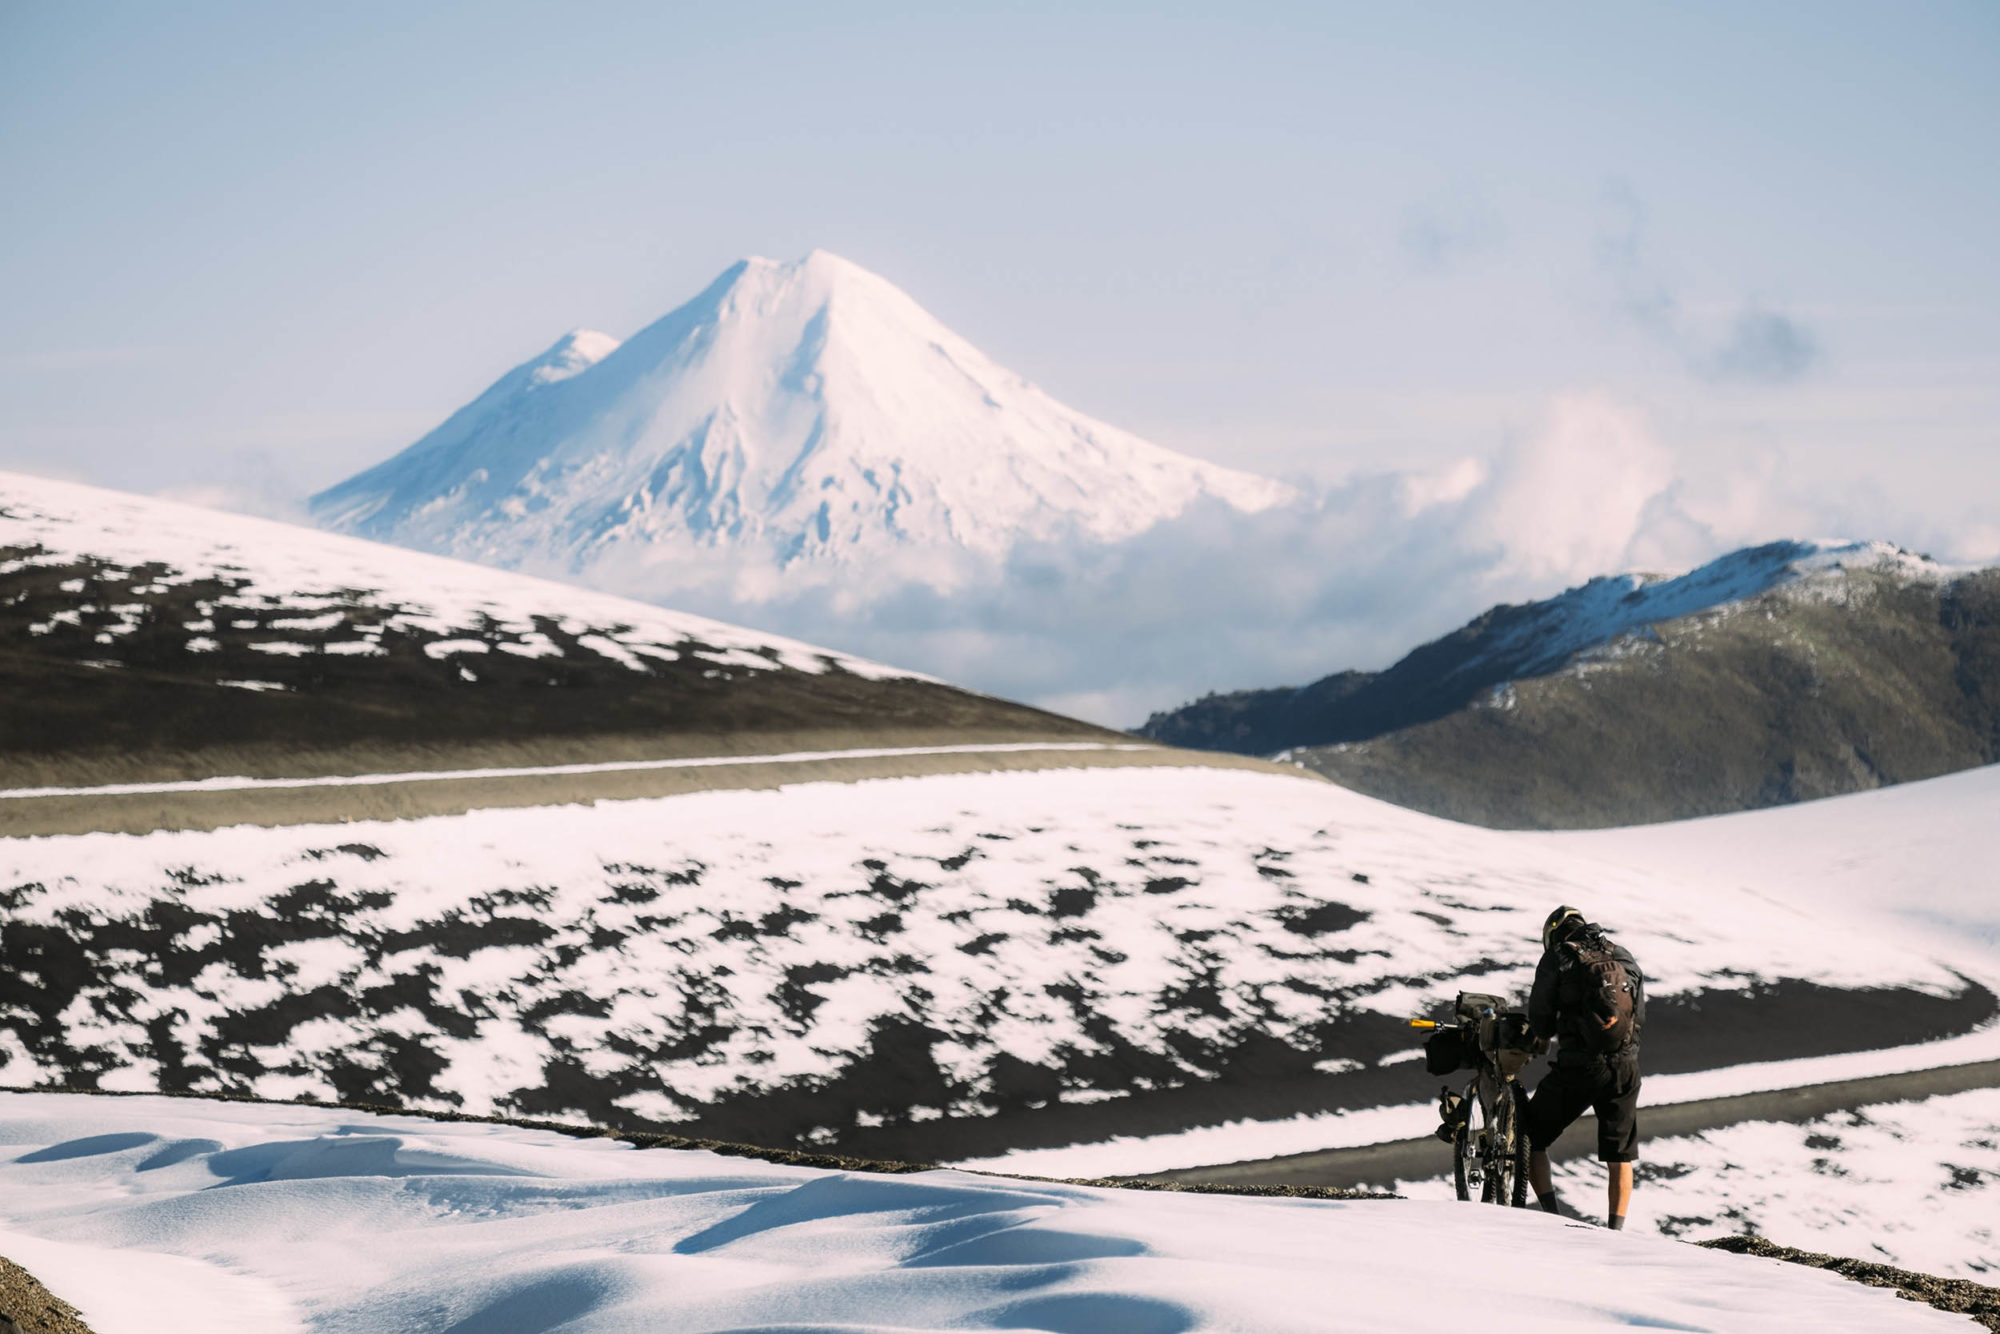 Cordillera de Fuego Film, Montanus